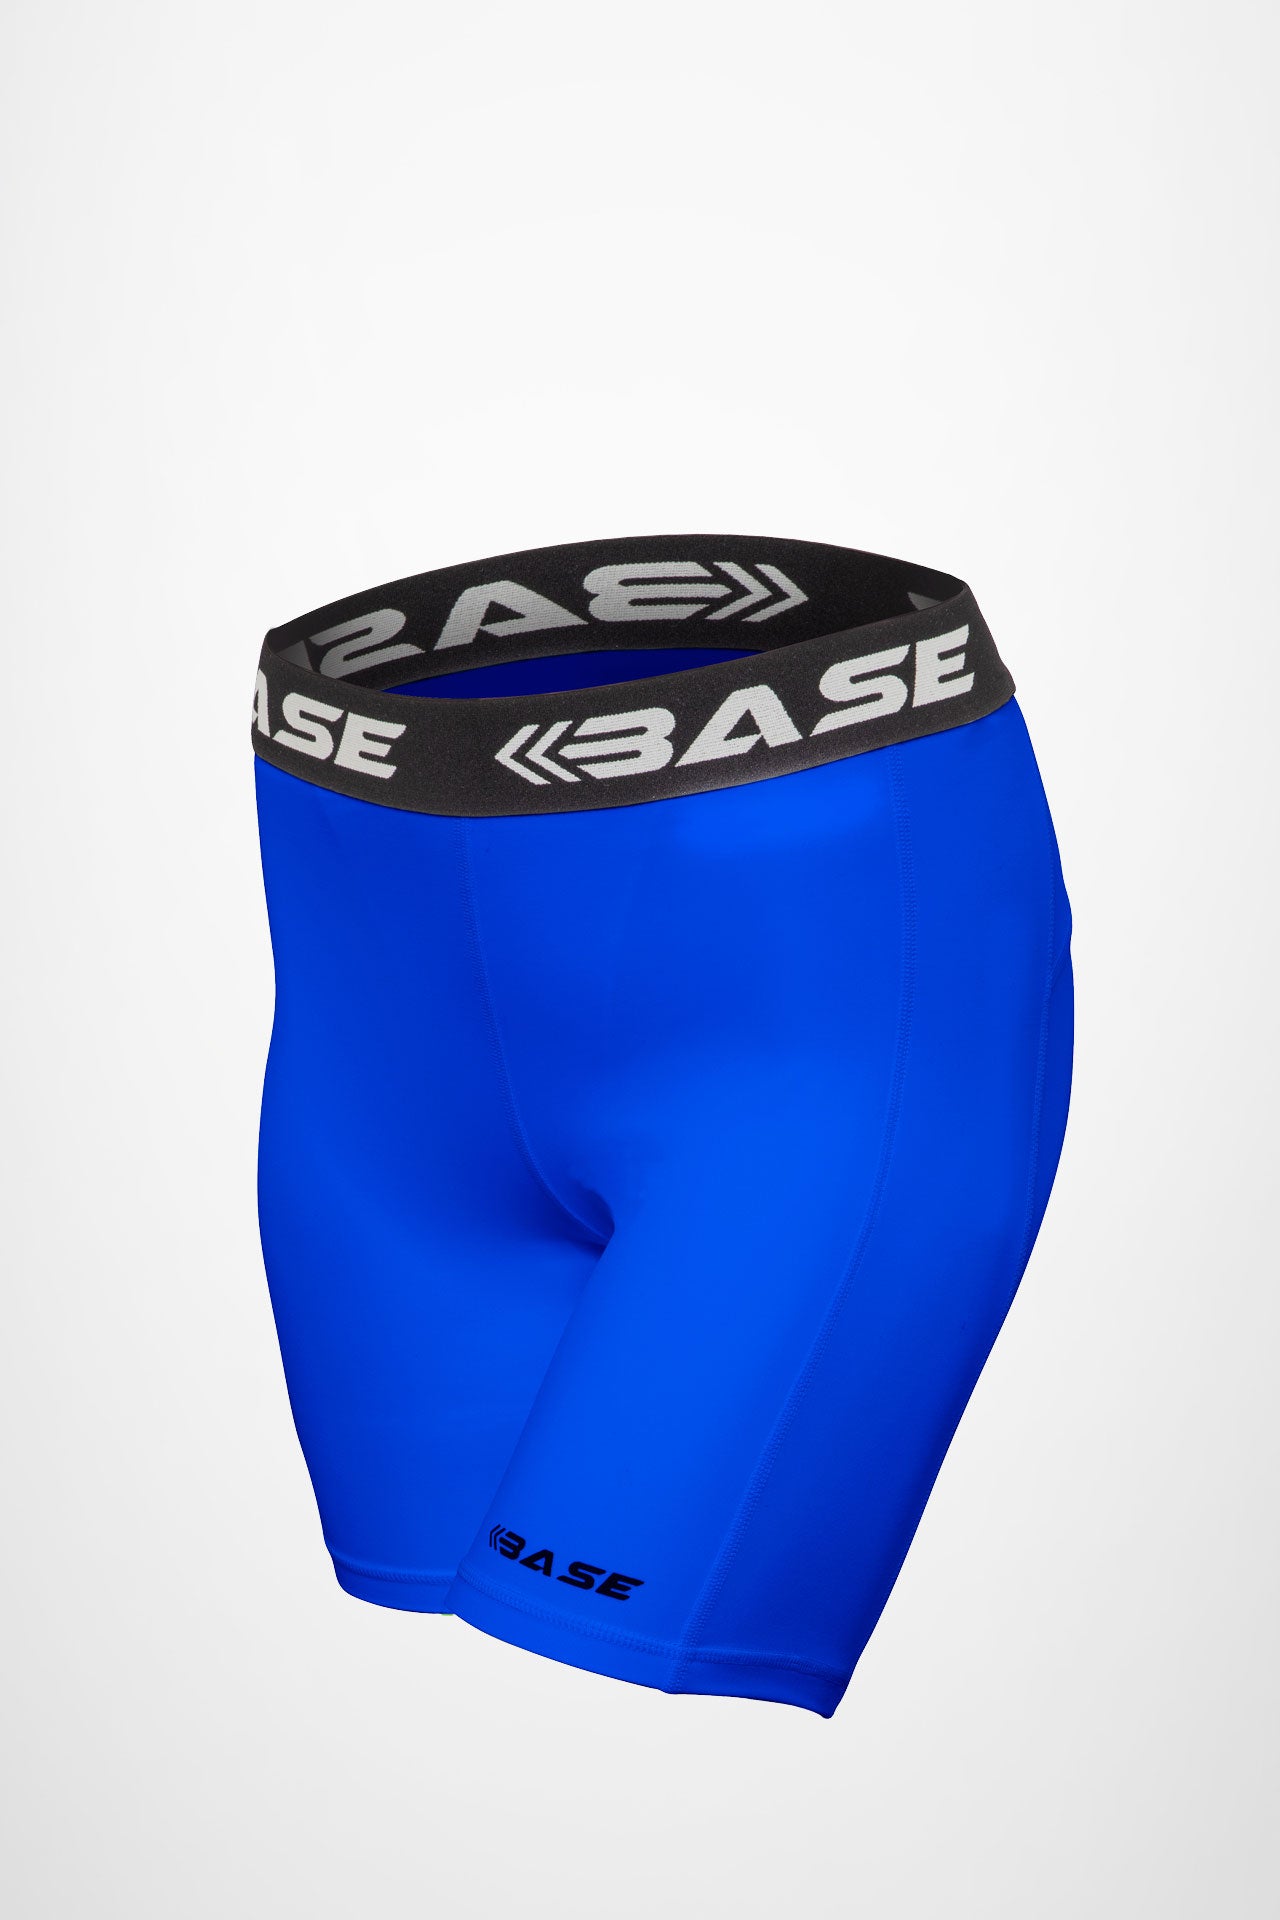 BASE Women's Compression Shorts - Royal – BASE Compression